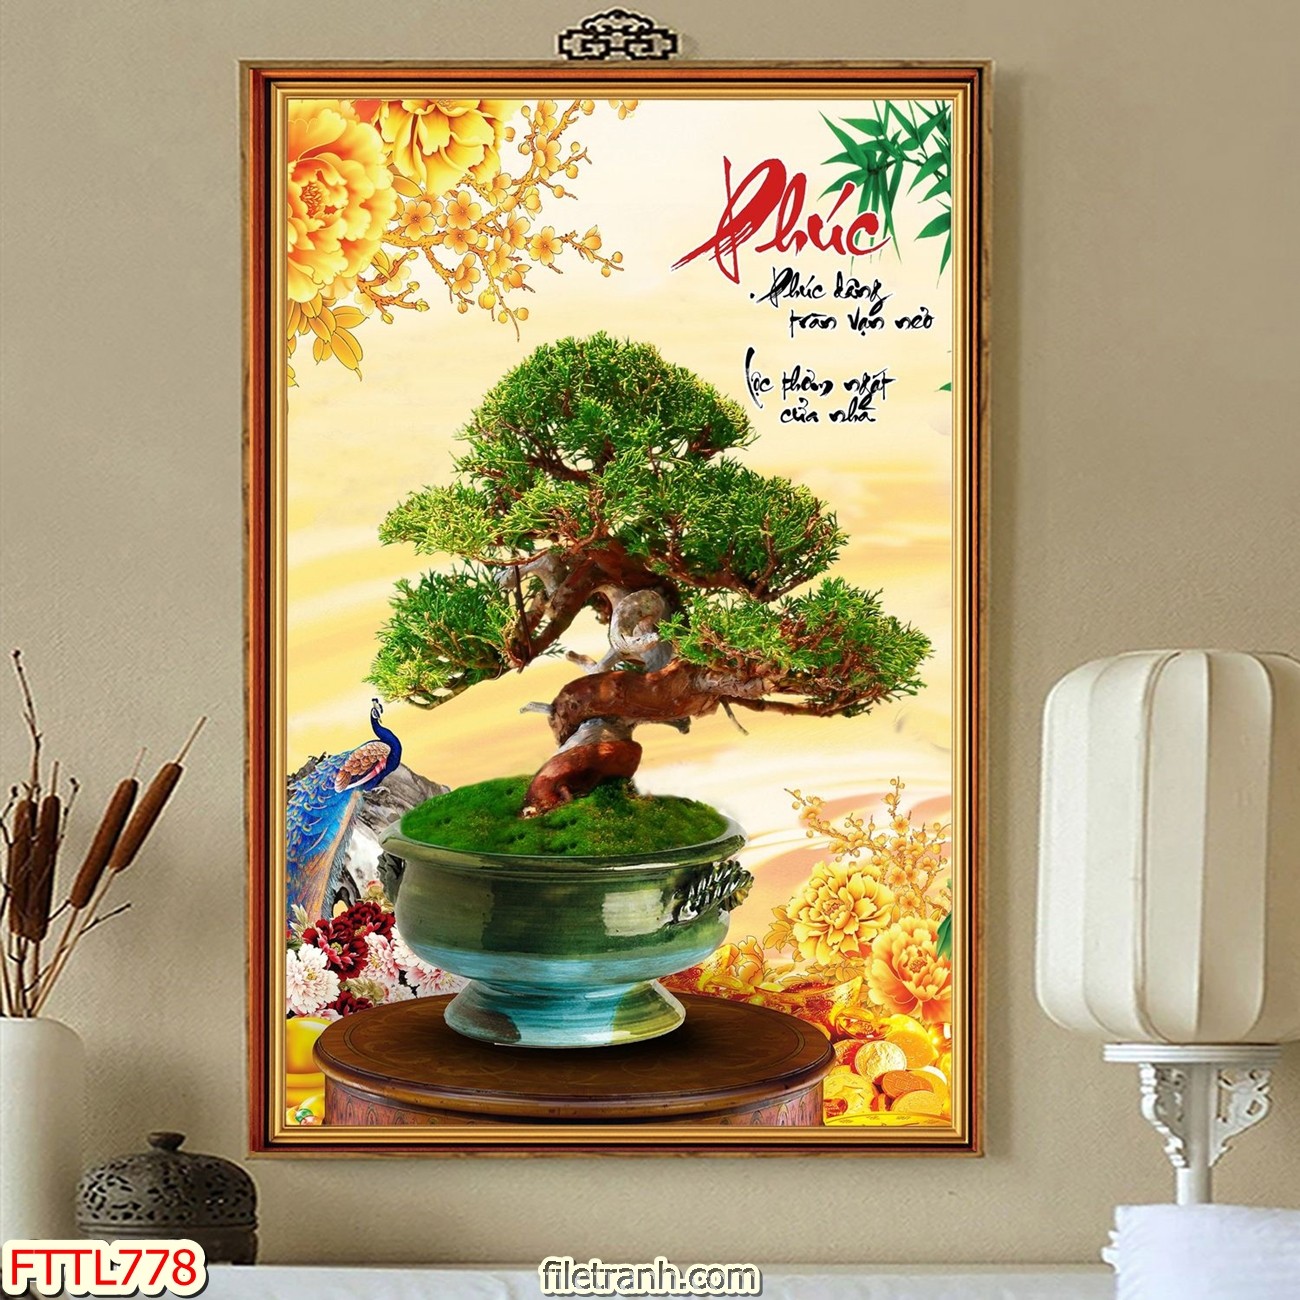 https://filetranh.com/file-tranh-chau-mai-bonsai/file-tranh-chau-mai-bonsai-fttl778.html